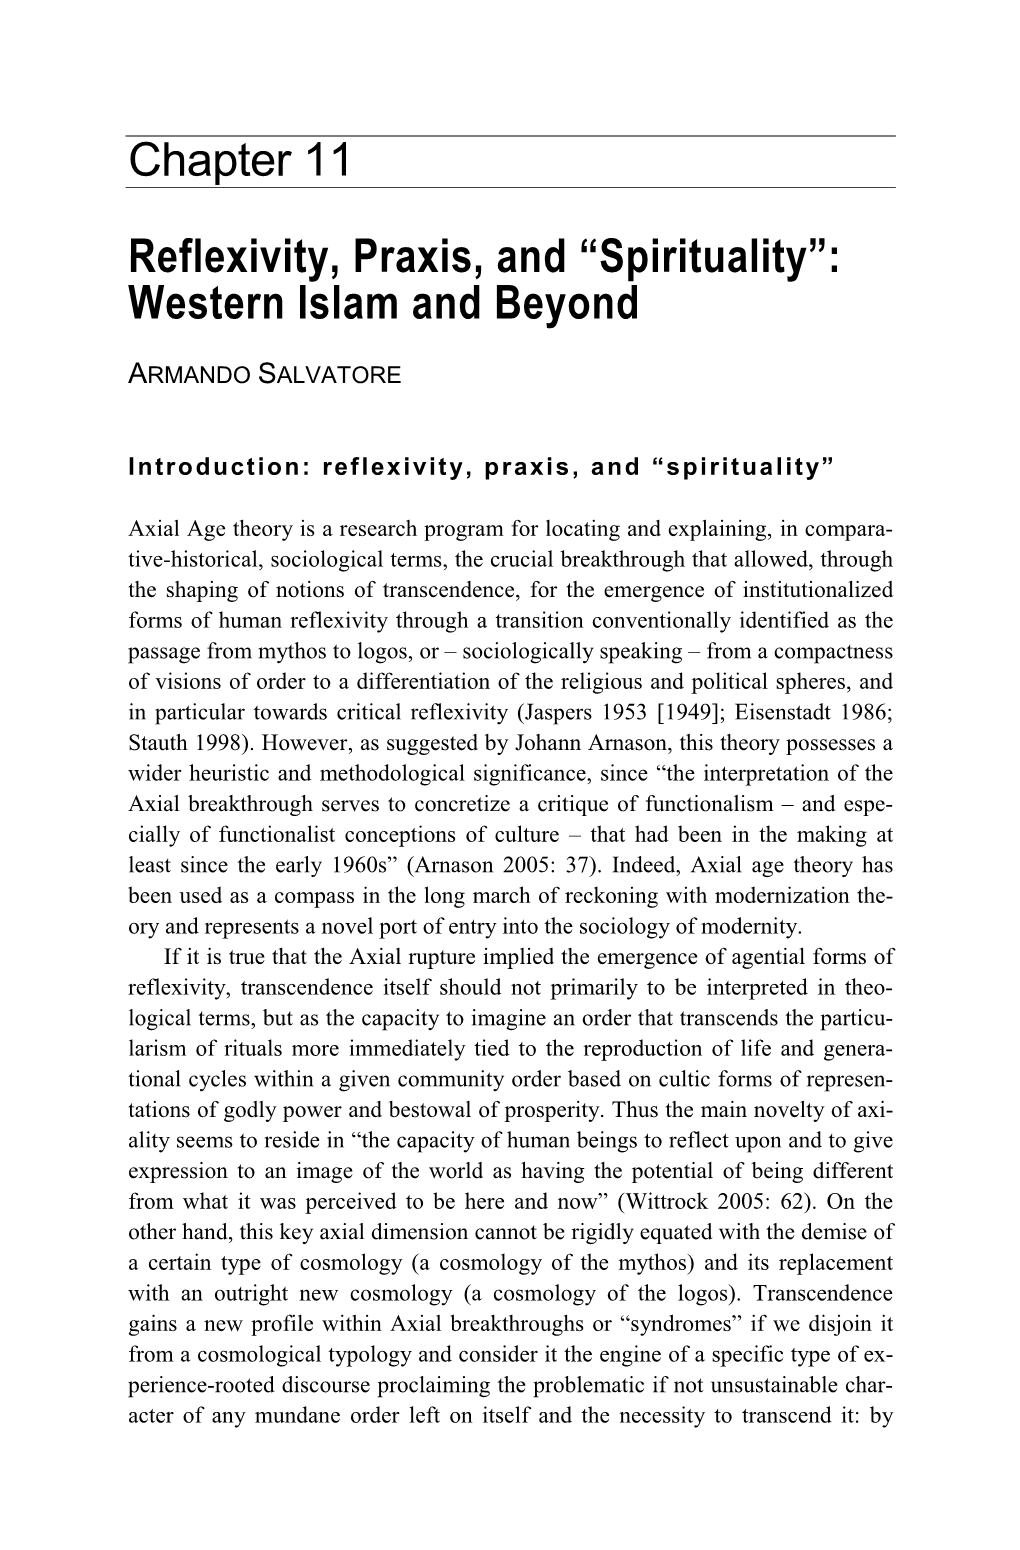 Western Islam and Beyond